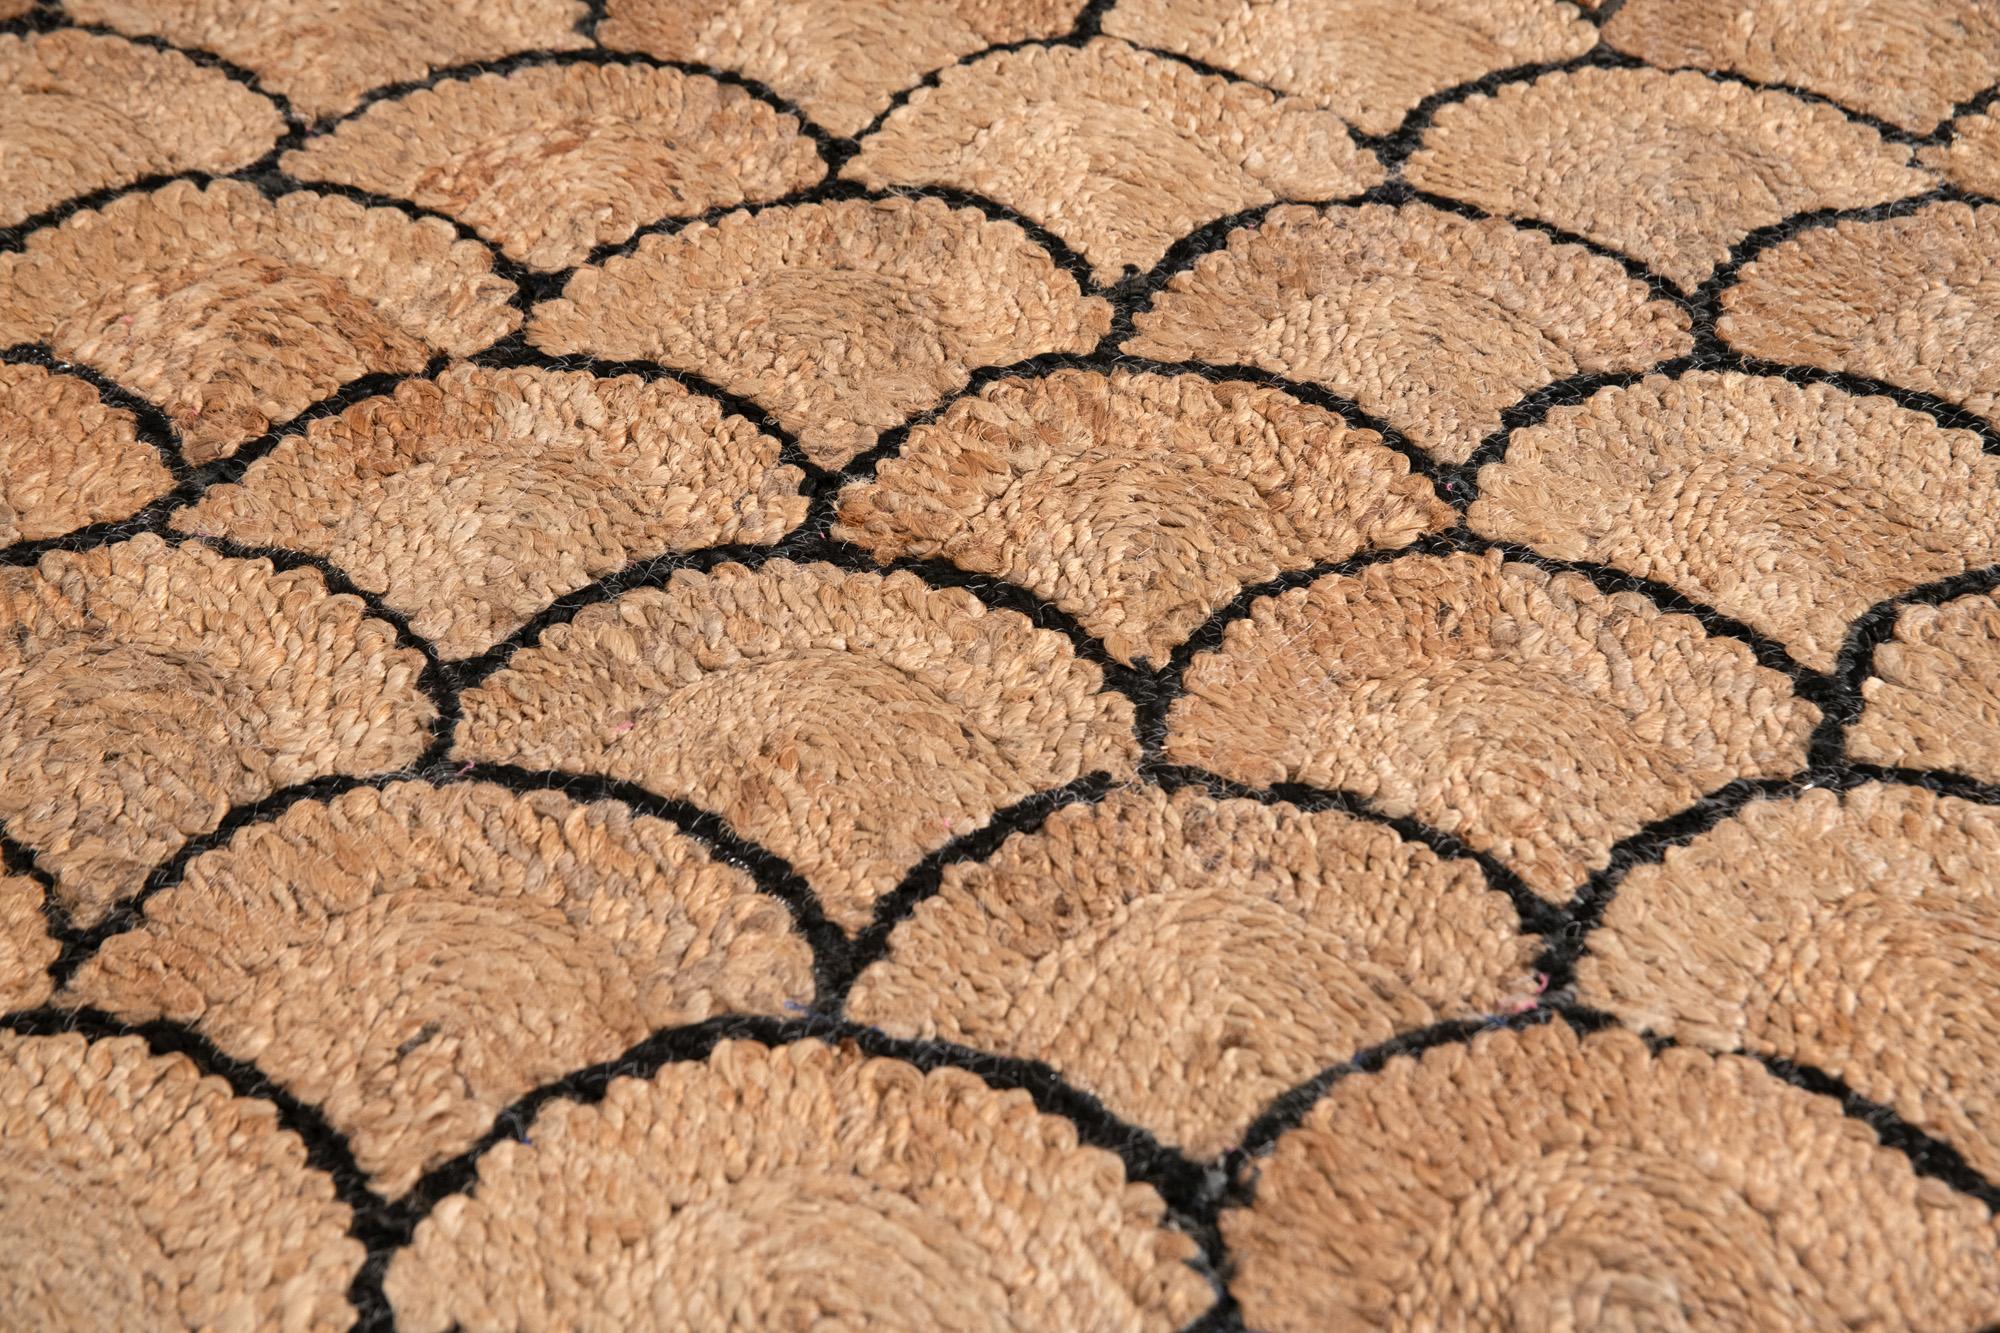 Modern Machine Stitched Jute Carpet Rug Natural Brown & Black Venus 8